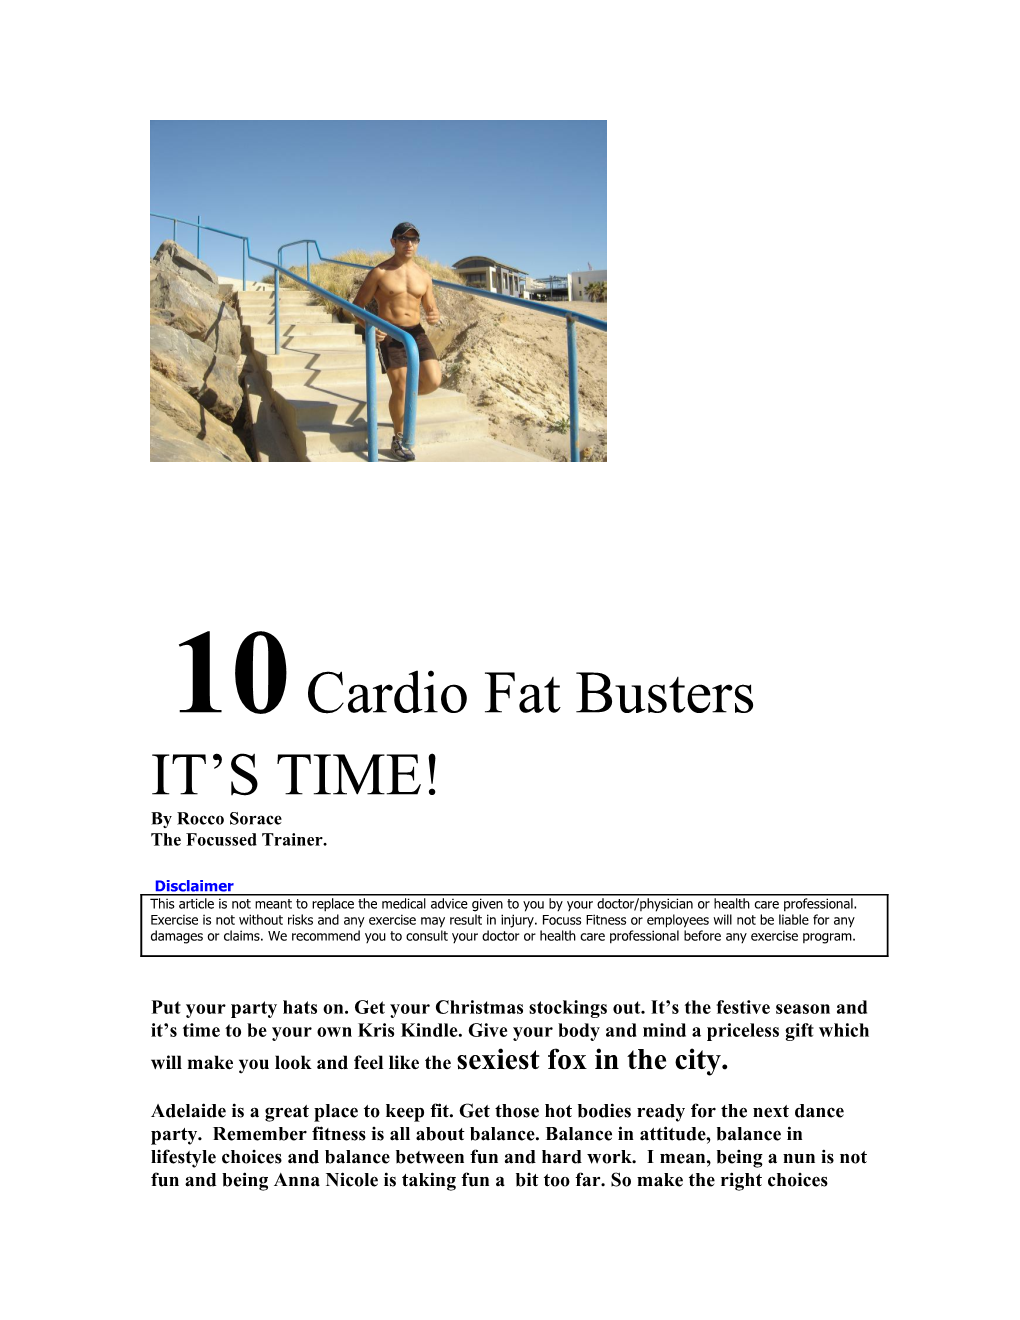 Top Ten Cardio Fat Busters